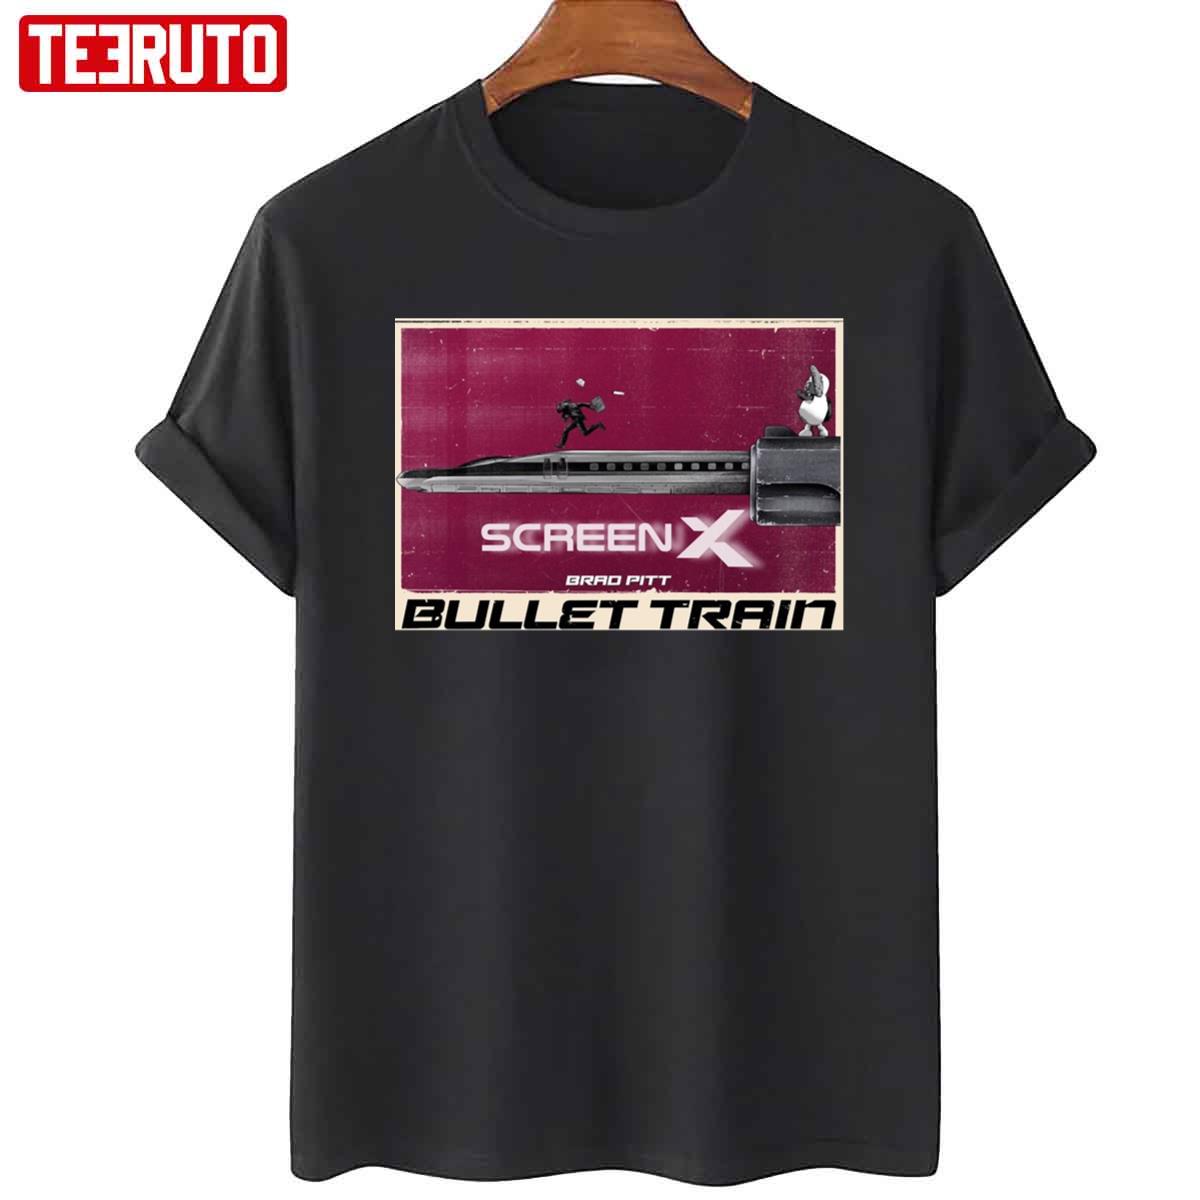 Screen X Brad Pitt Bullet Train Unisex T-Shirt